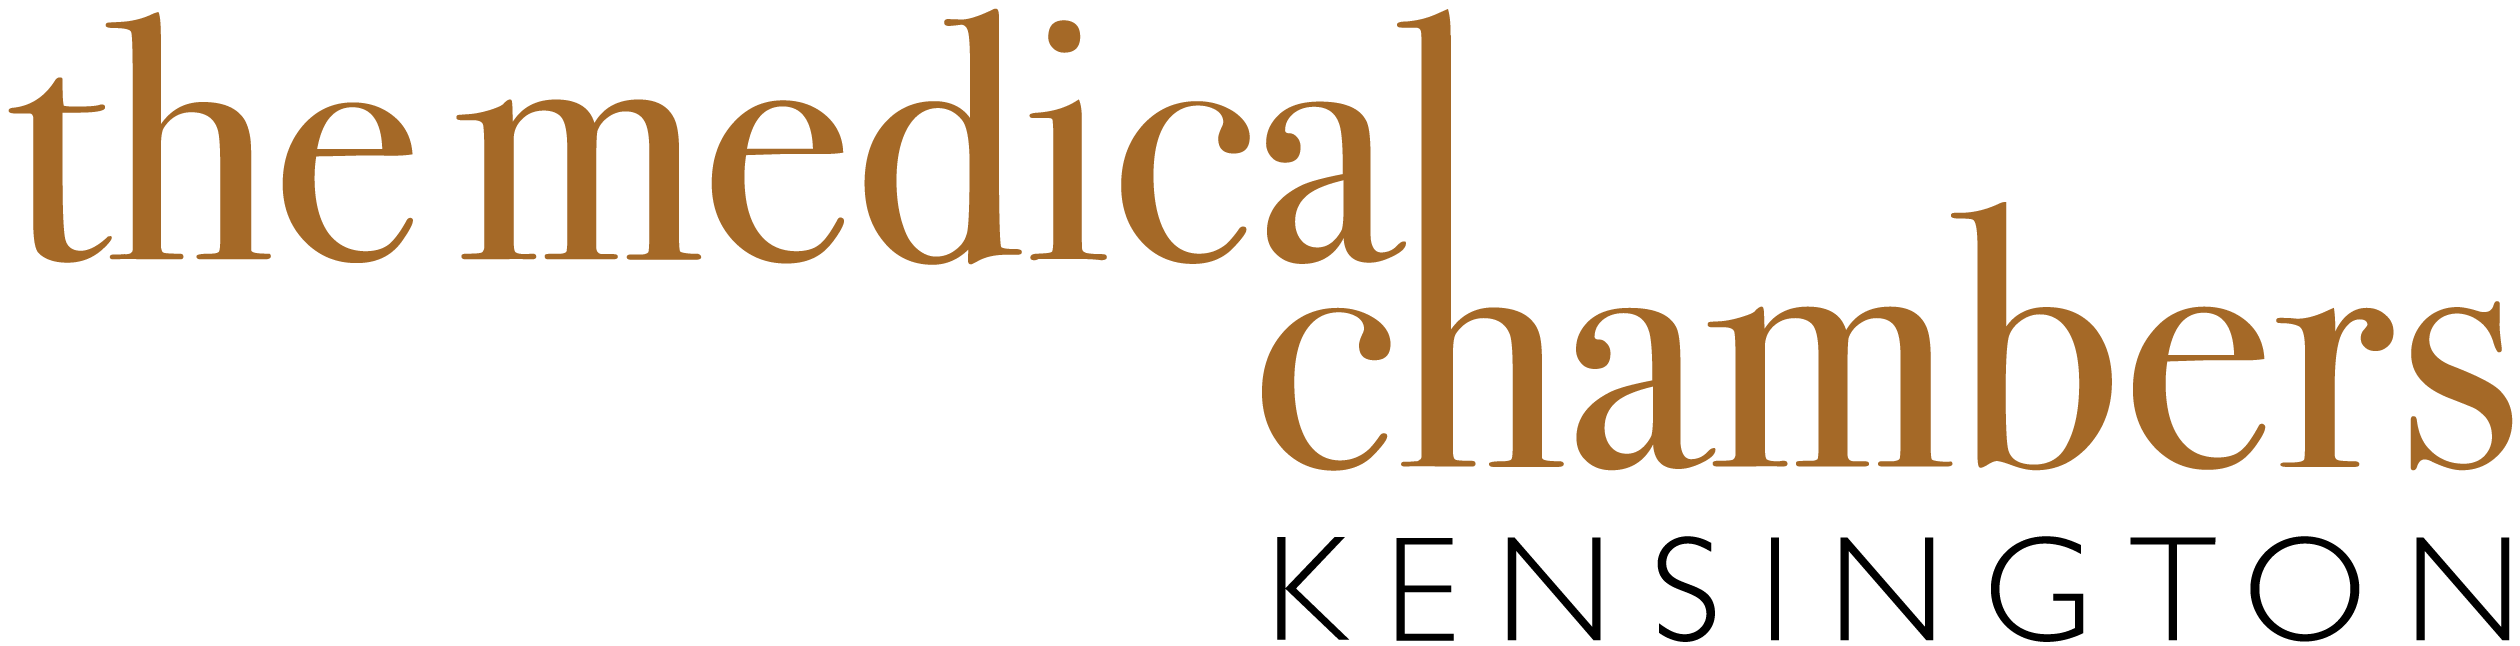 The Medical Chambers Kensington logo